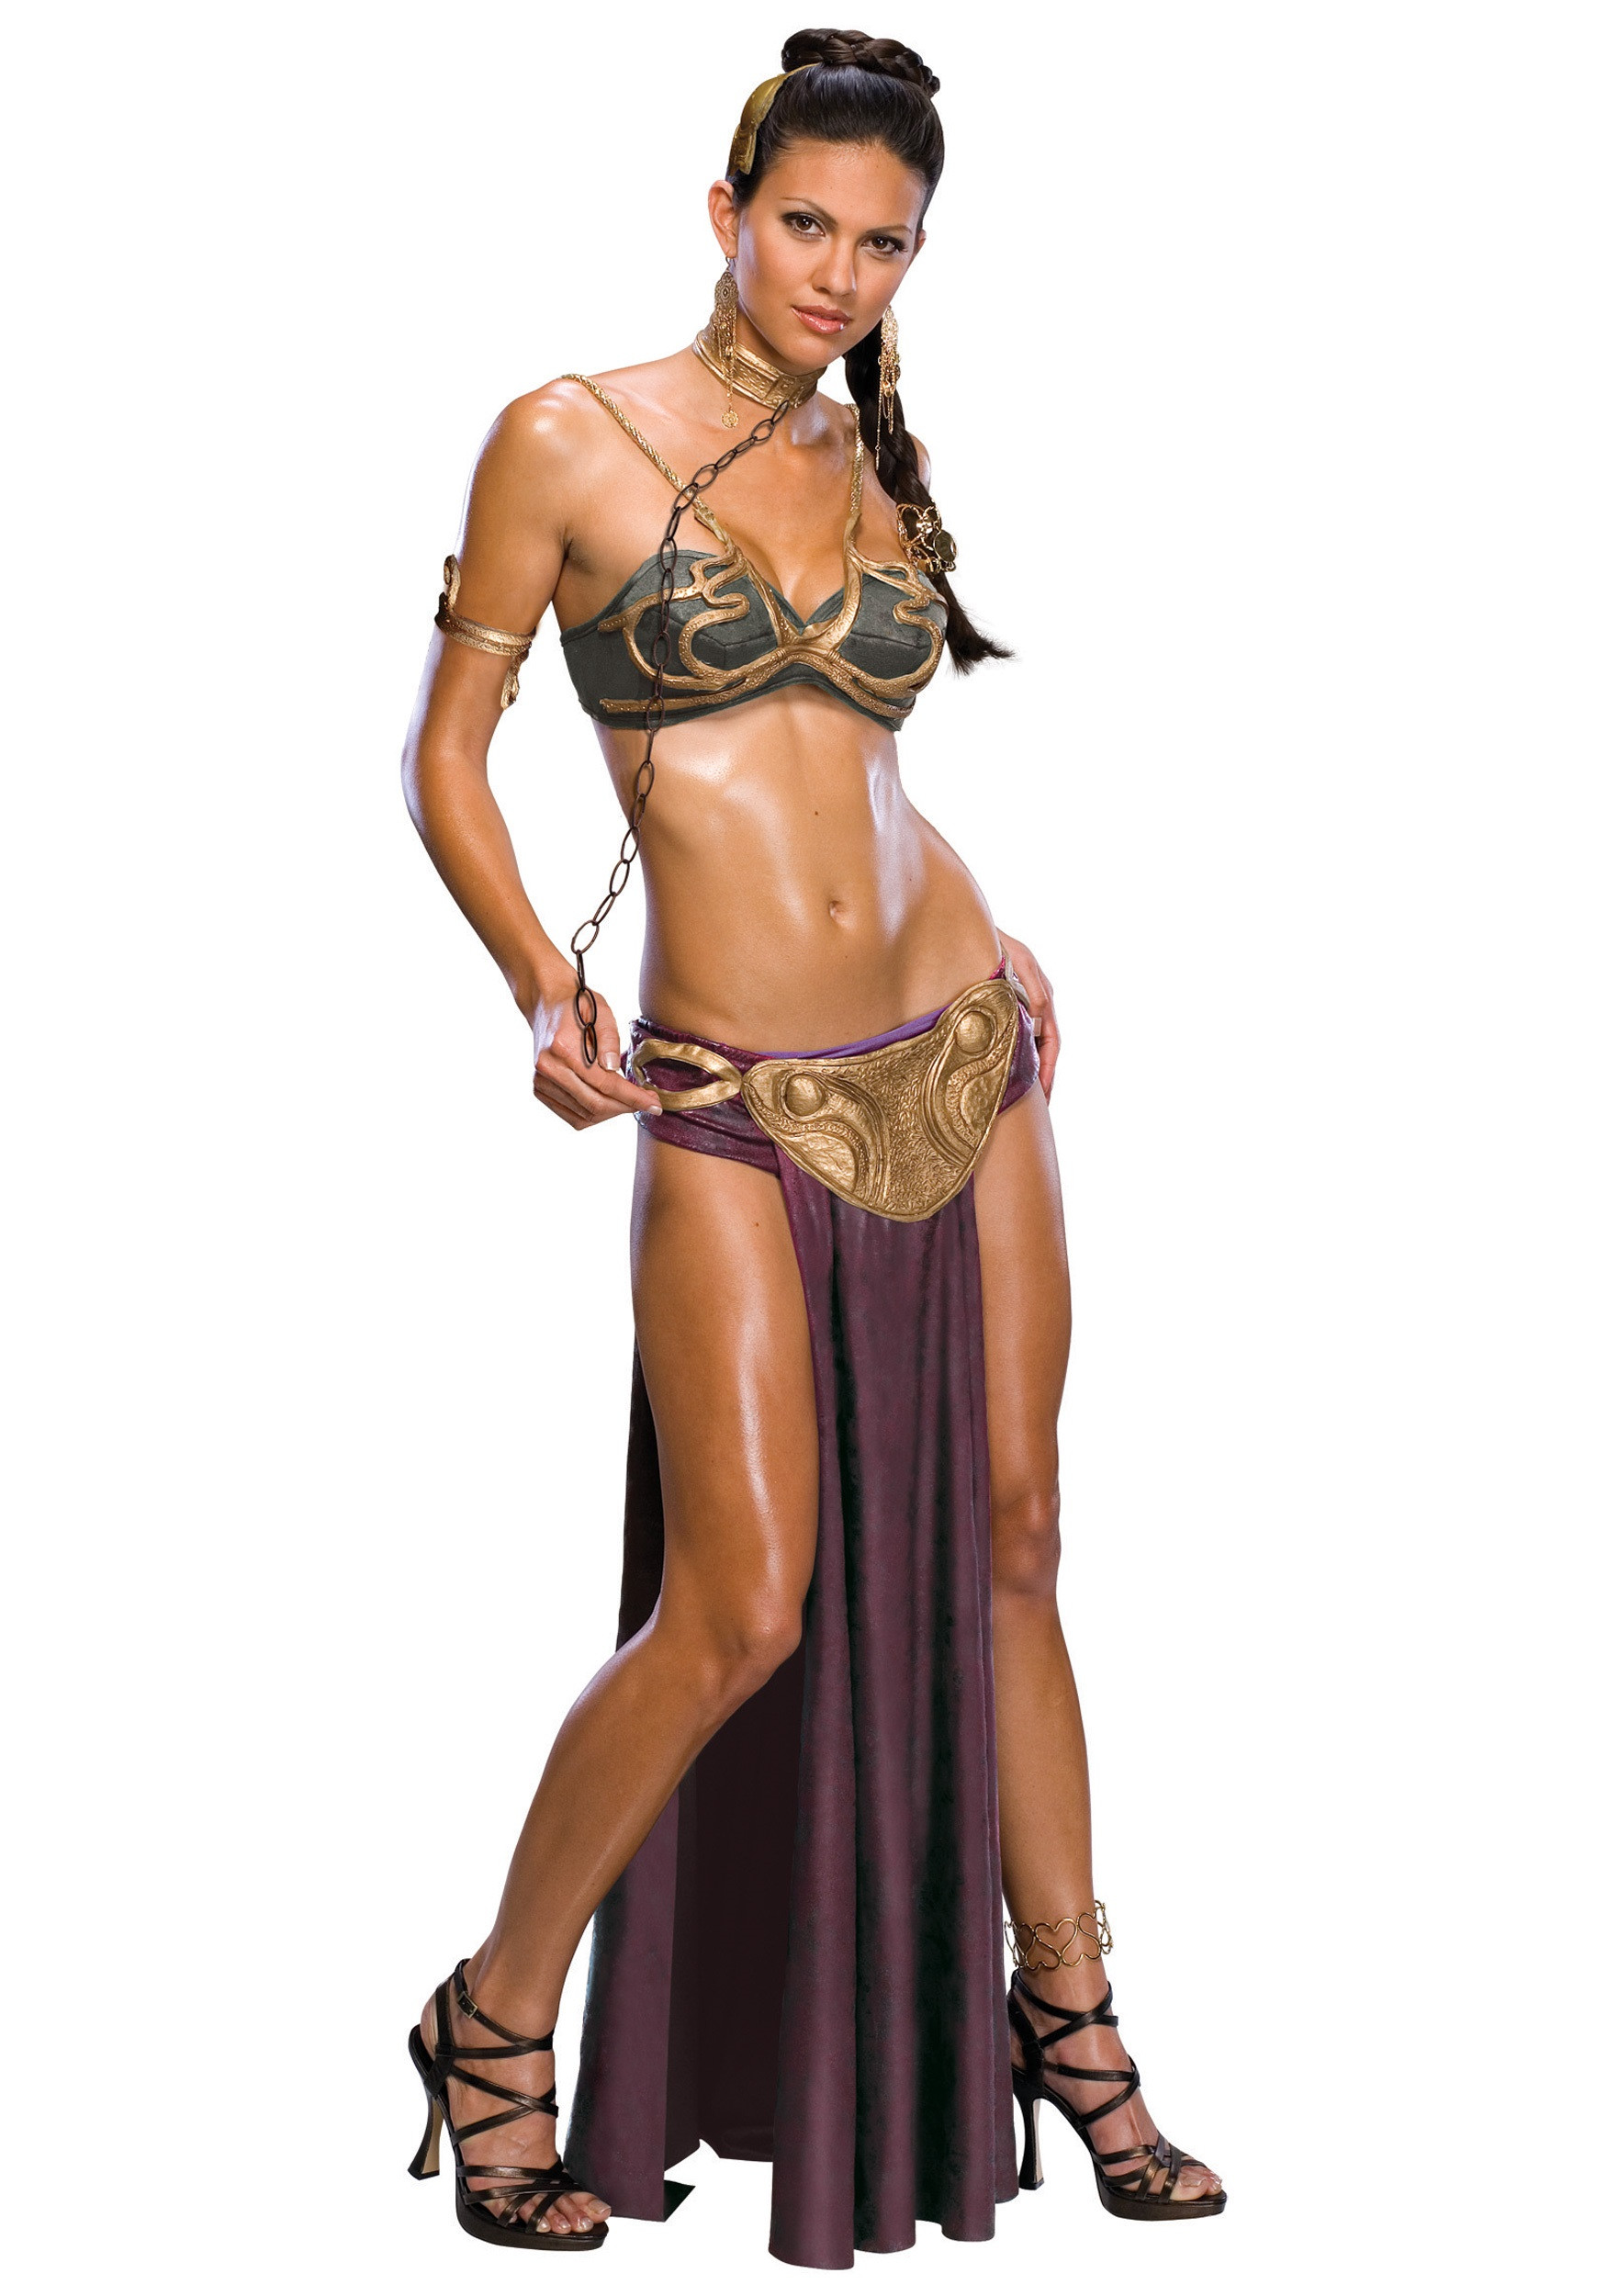 Best ideas about Princess Leia Slave Costume DIY
. Save or Pin y Princess Leia Slave Costume Now.